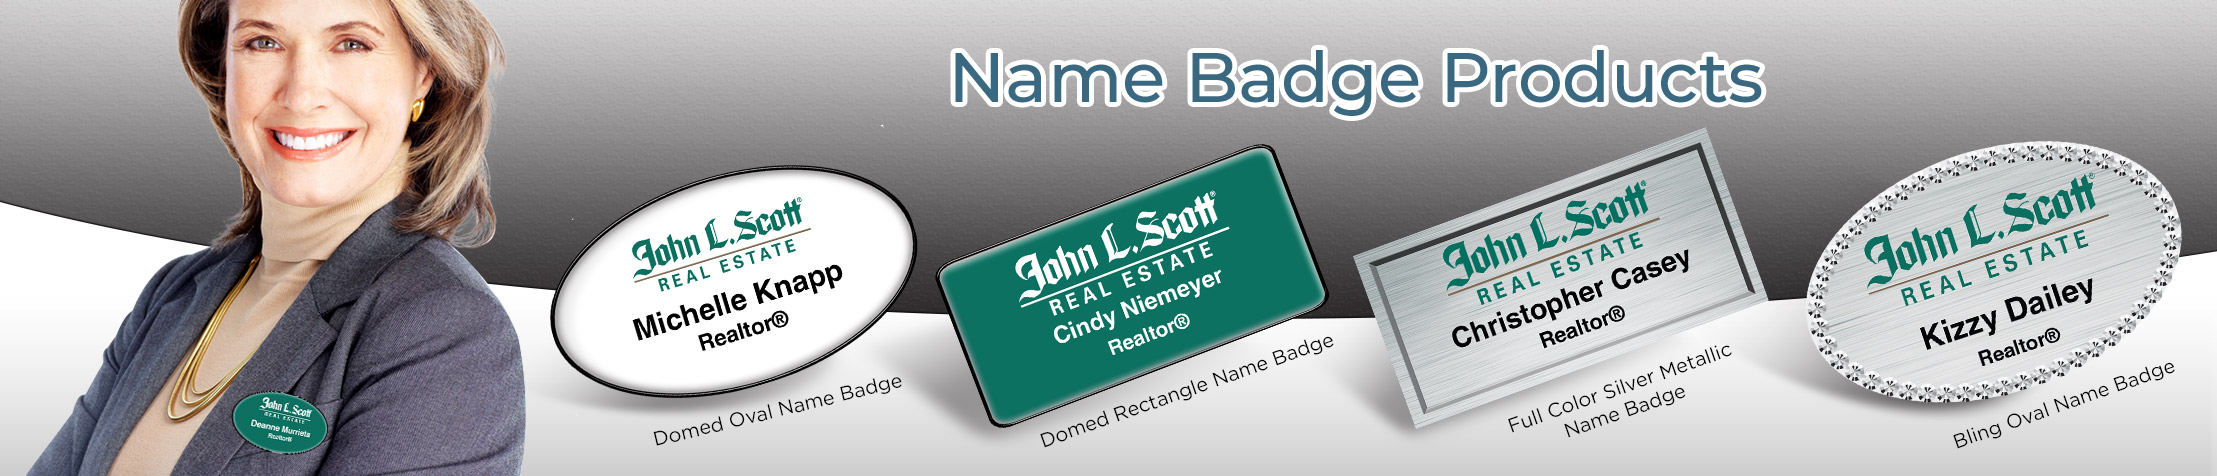 John L. Scott Real Estate Name Badge Products - John L. Scott Real Estate Name Tags for Realtors | BestPrintBuy.com